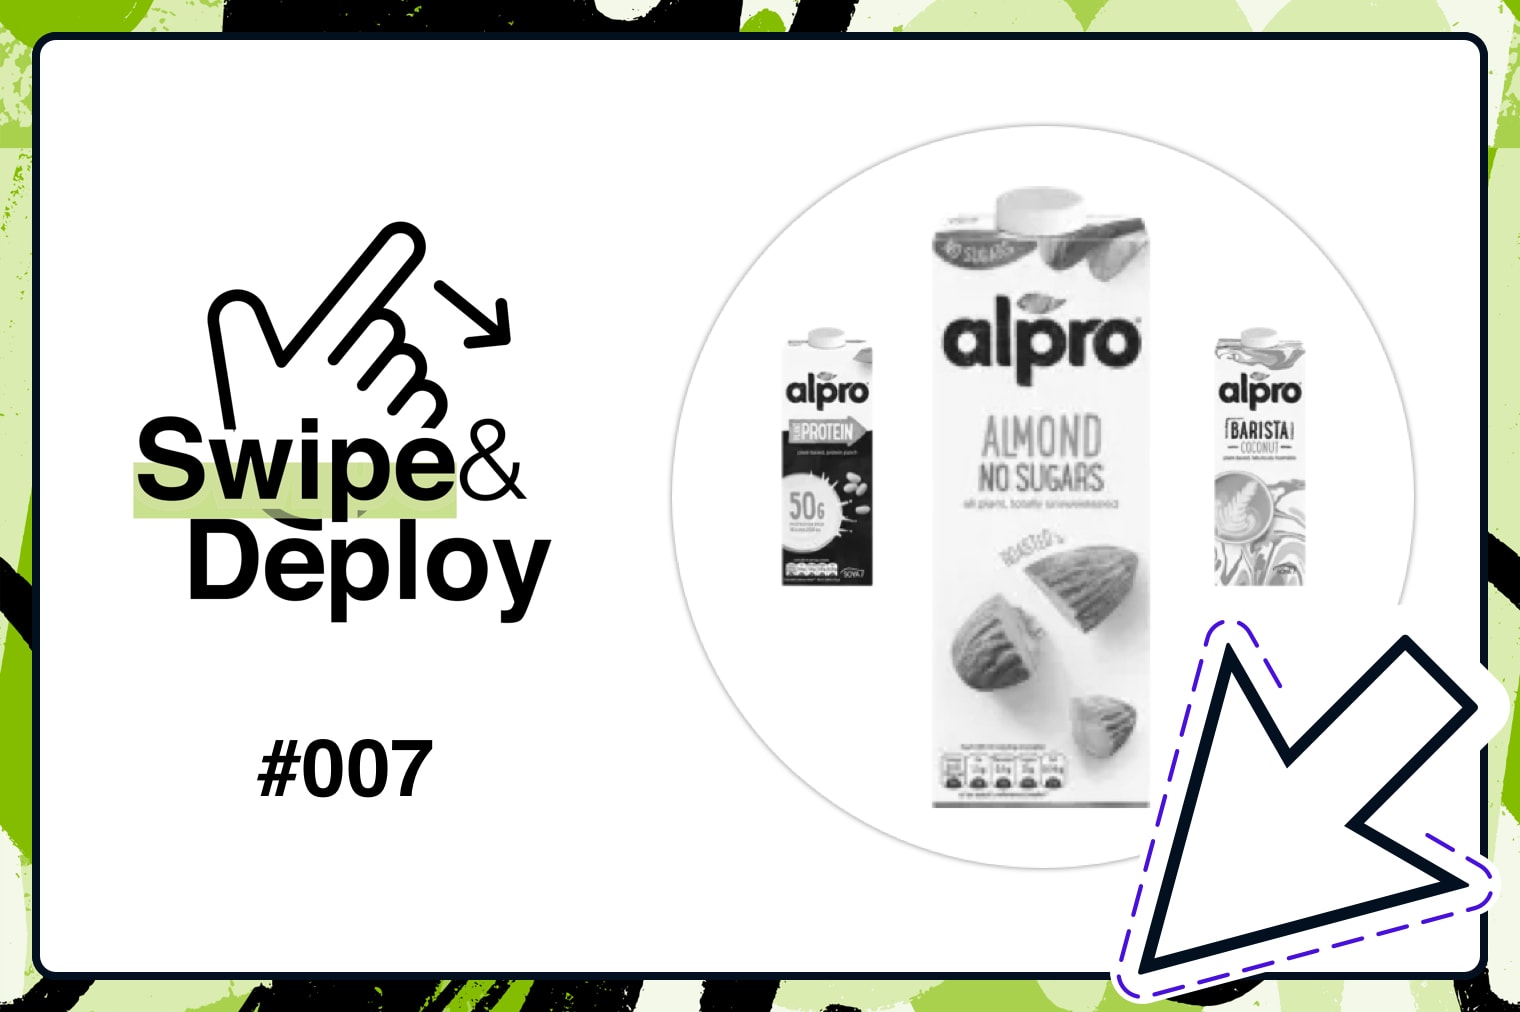 Swipe & Deploy 7 blog hero image of Alpro products.